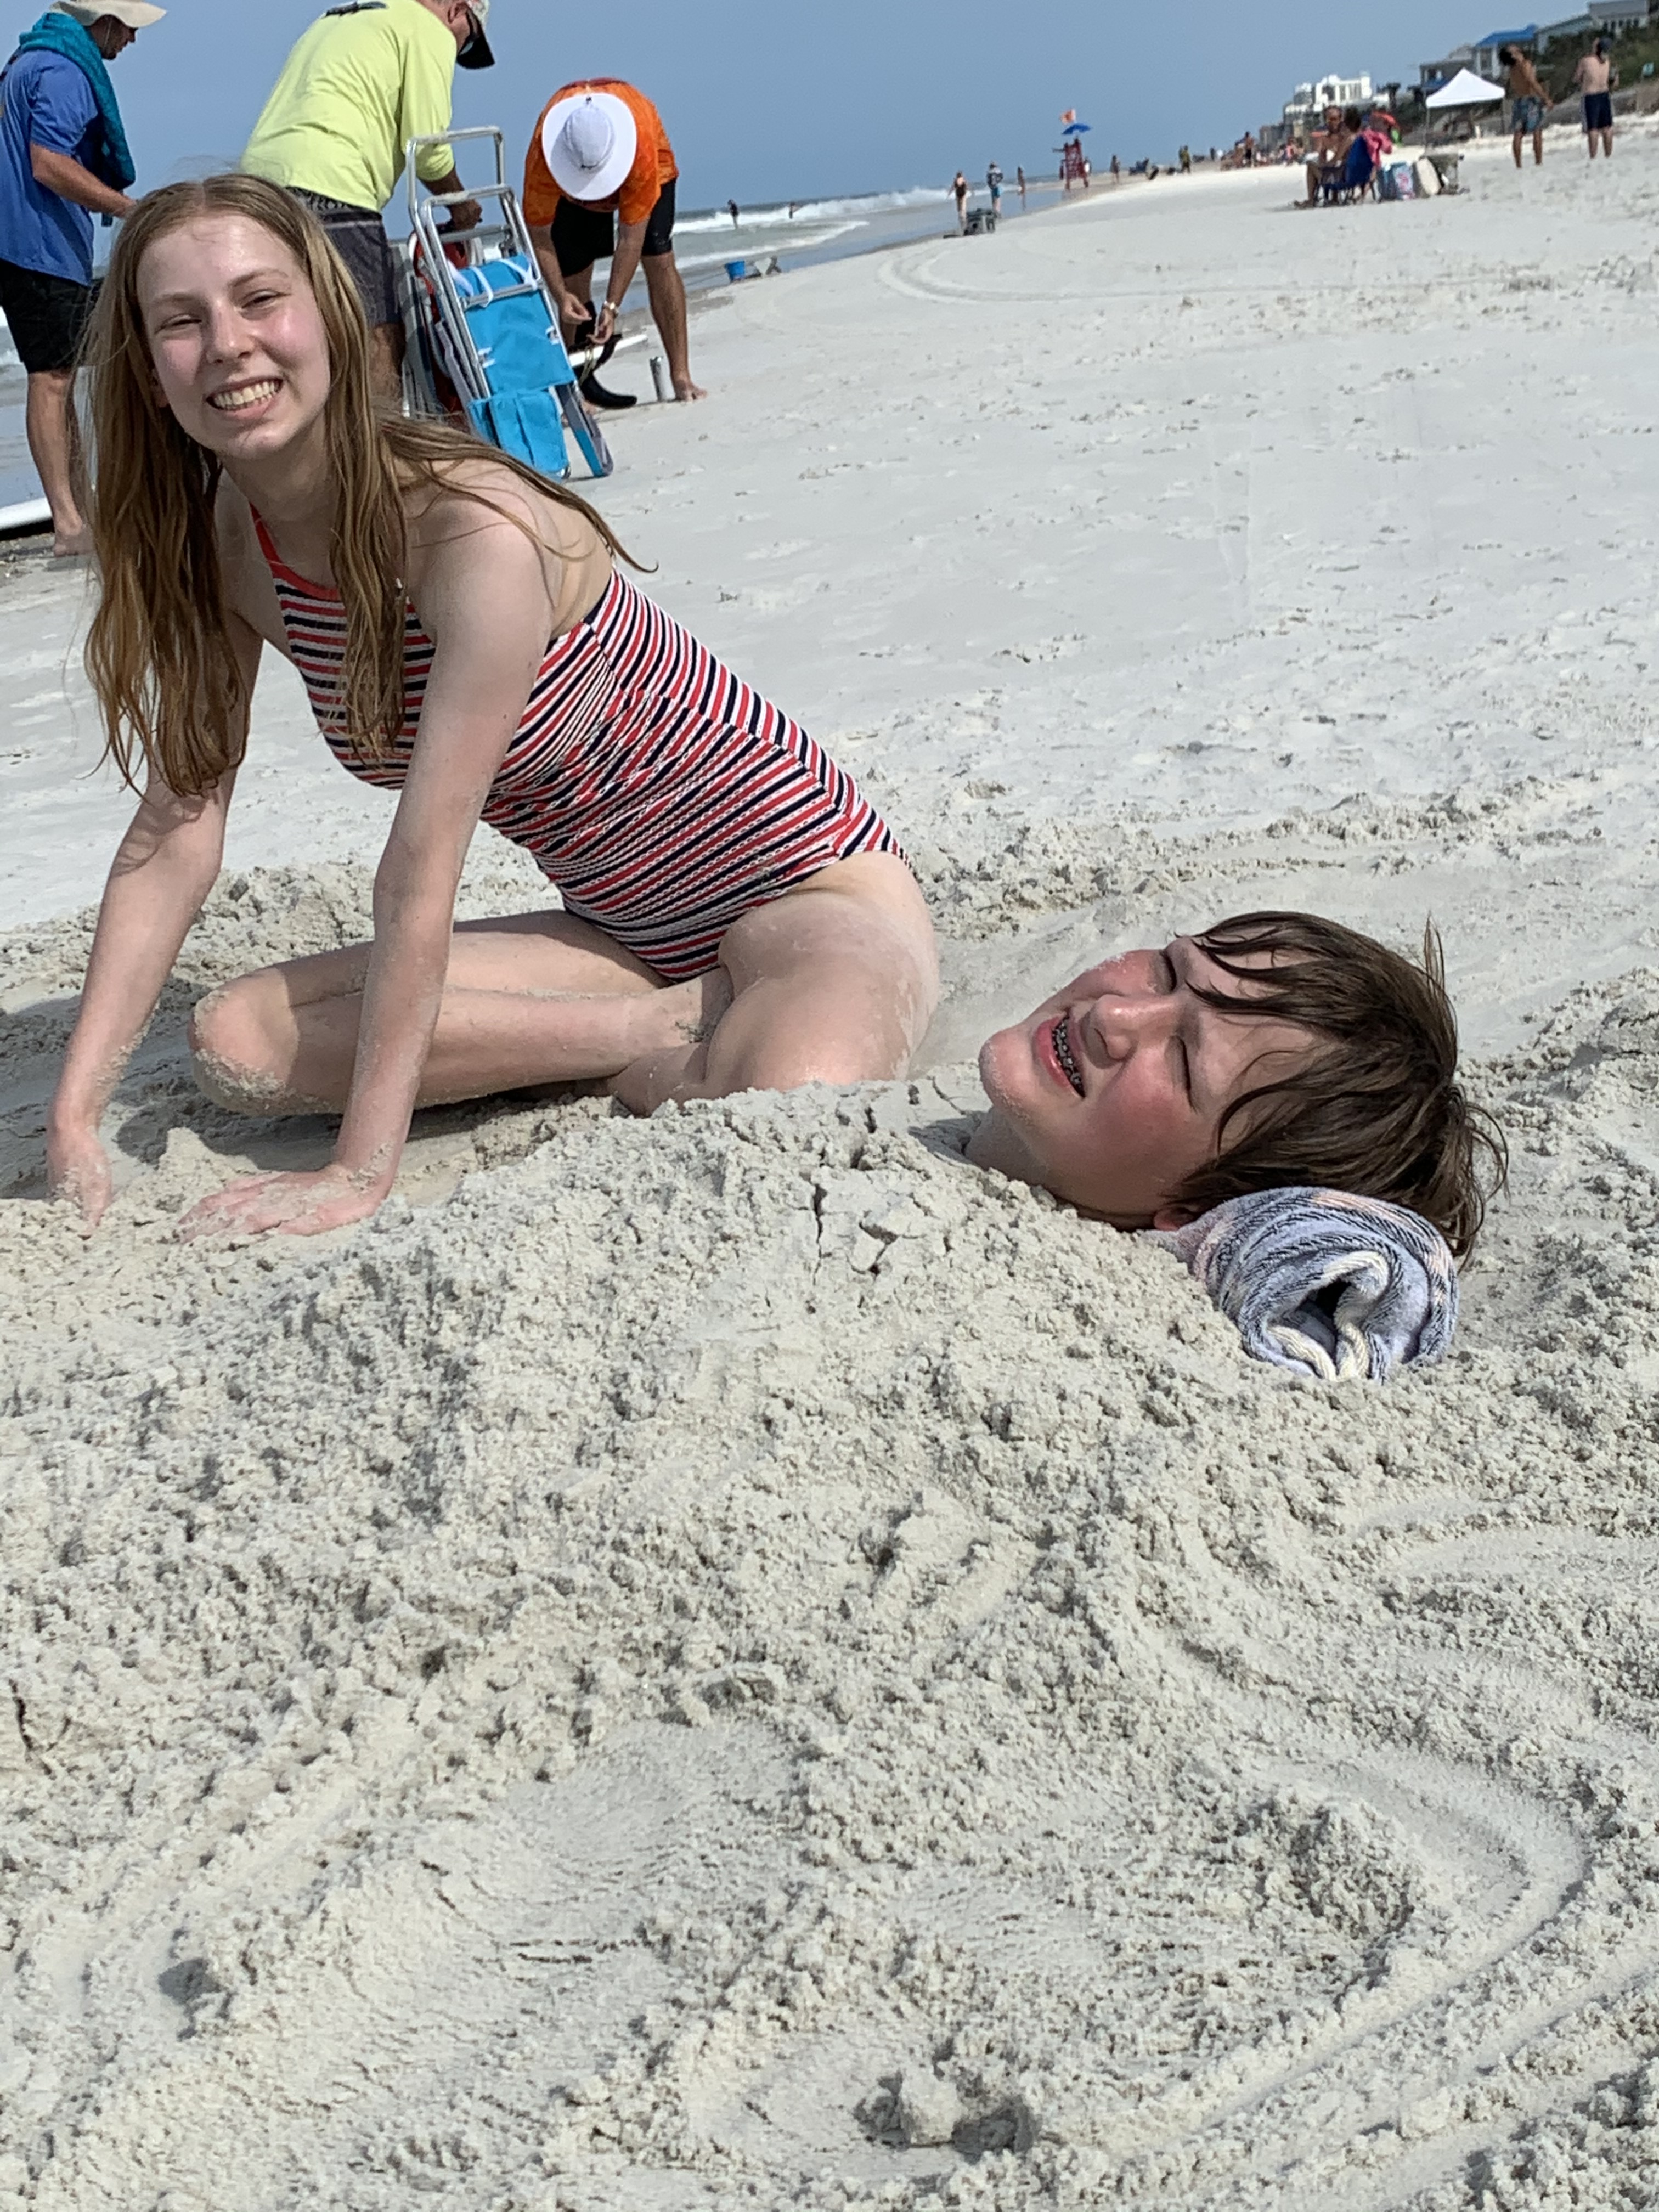 wm in sand